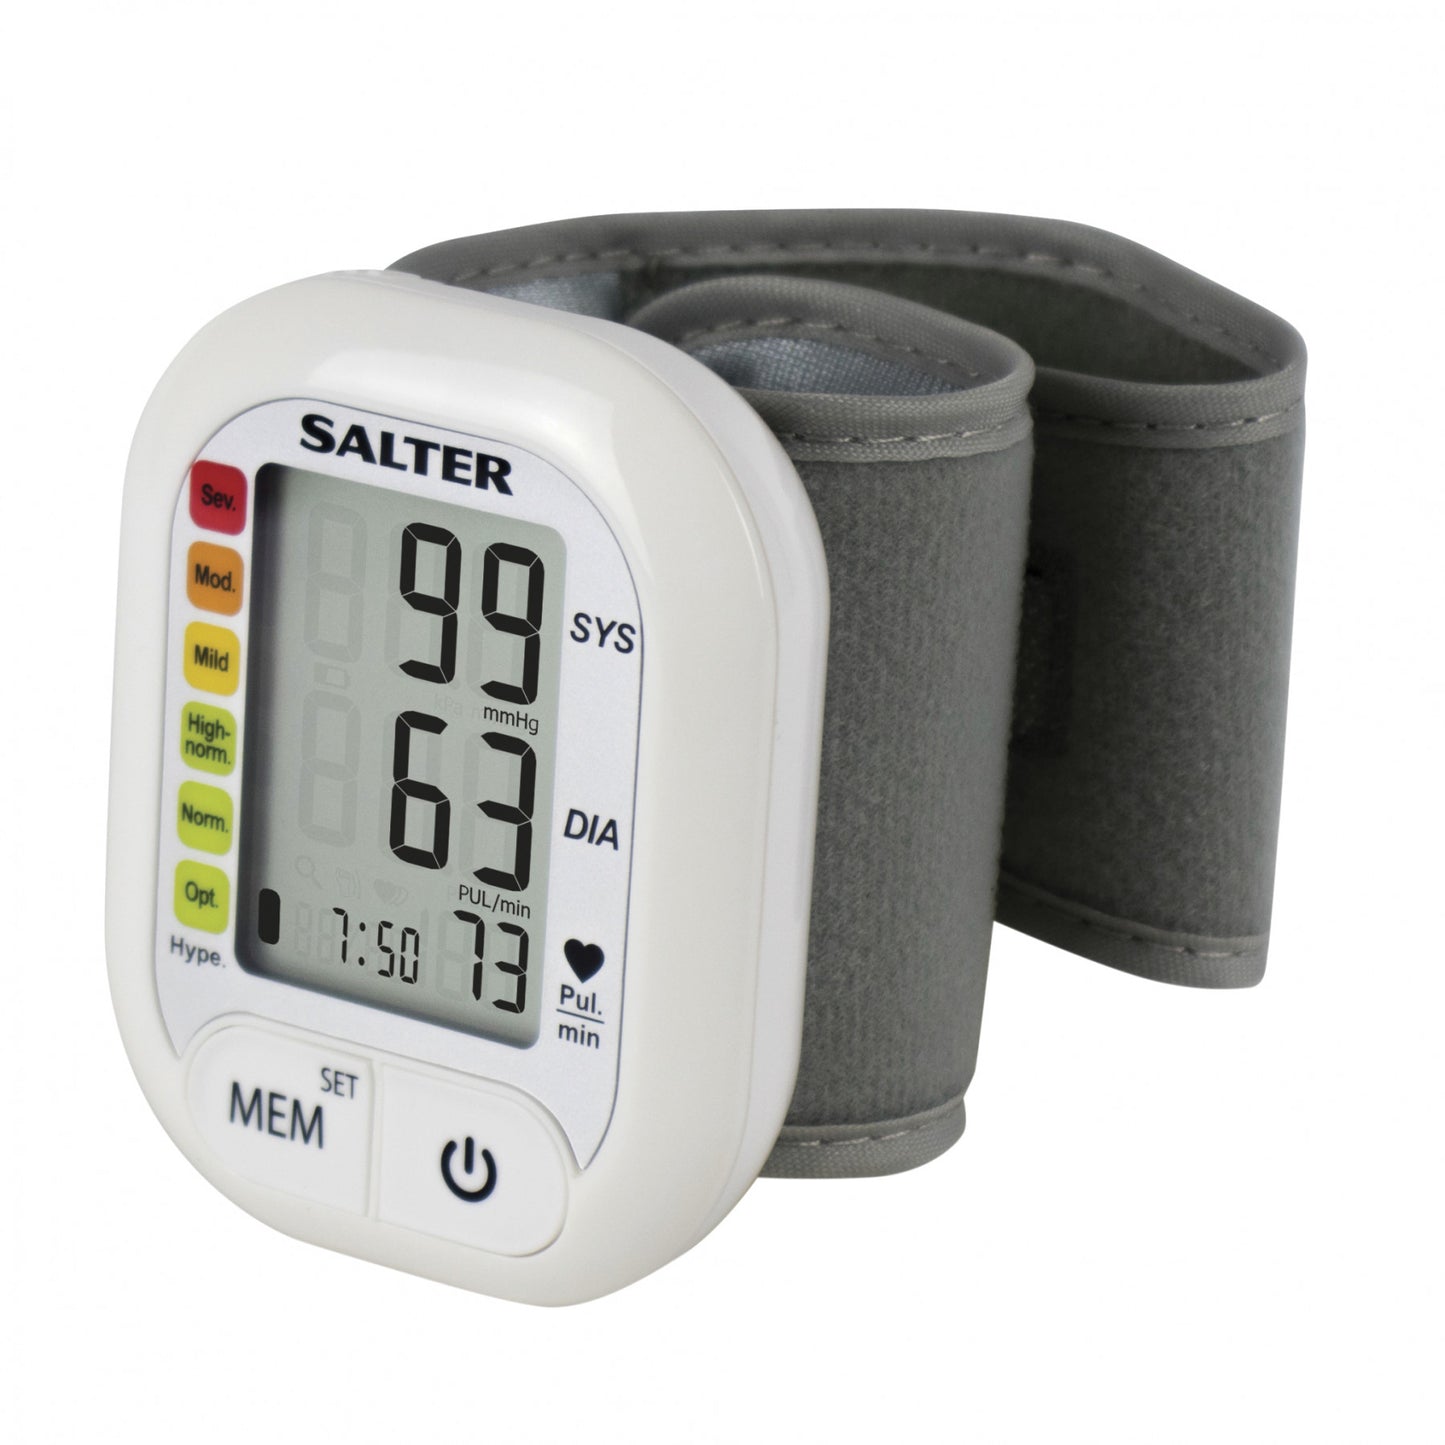 Salter by Homedics BPW-9101 Automatic Wrist Blood Pressure Monitor